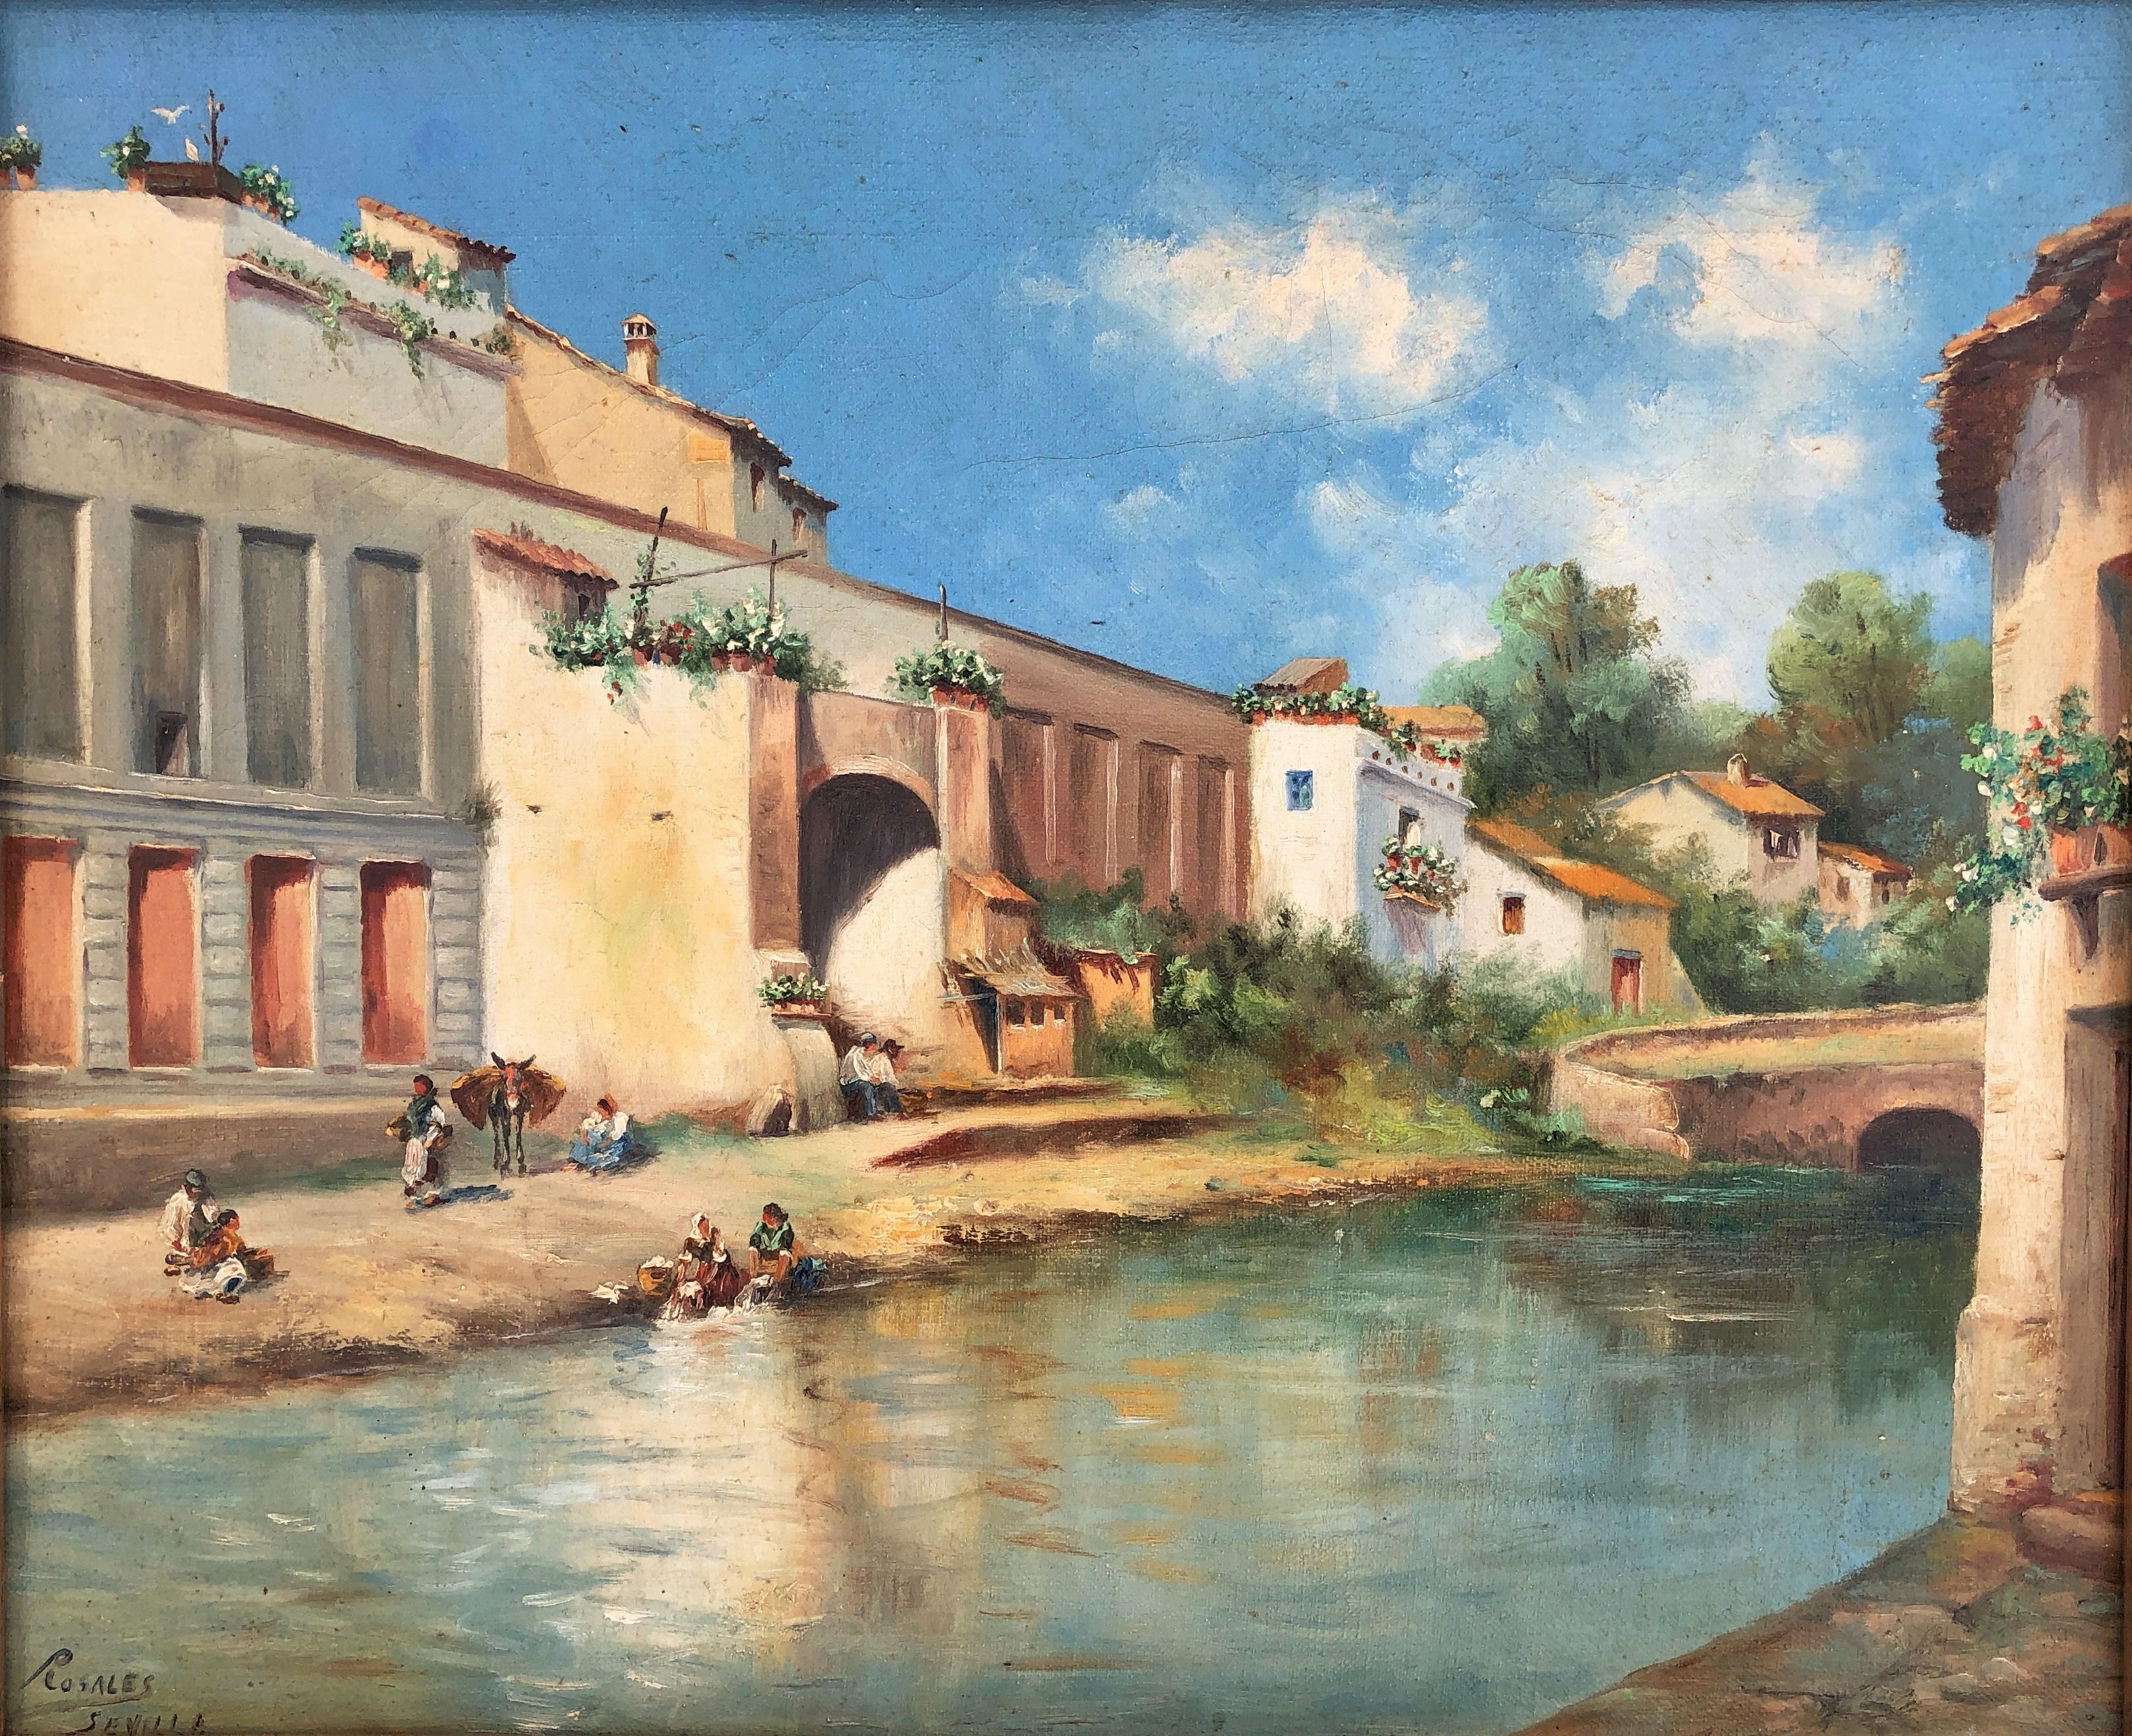 Seville Guadalquivir River Spain oil on canvas painting